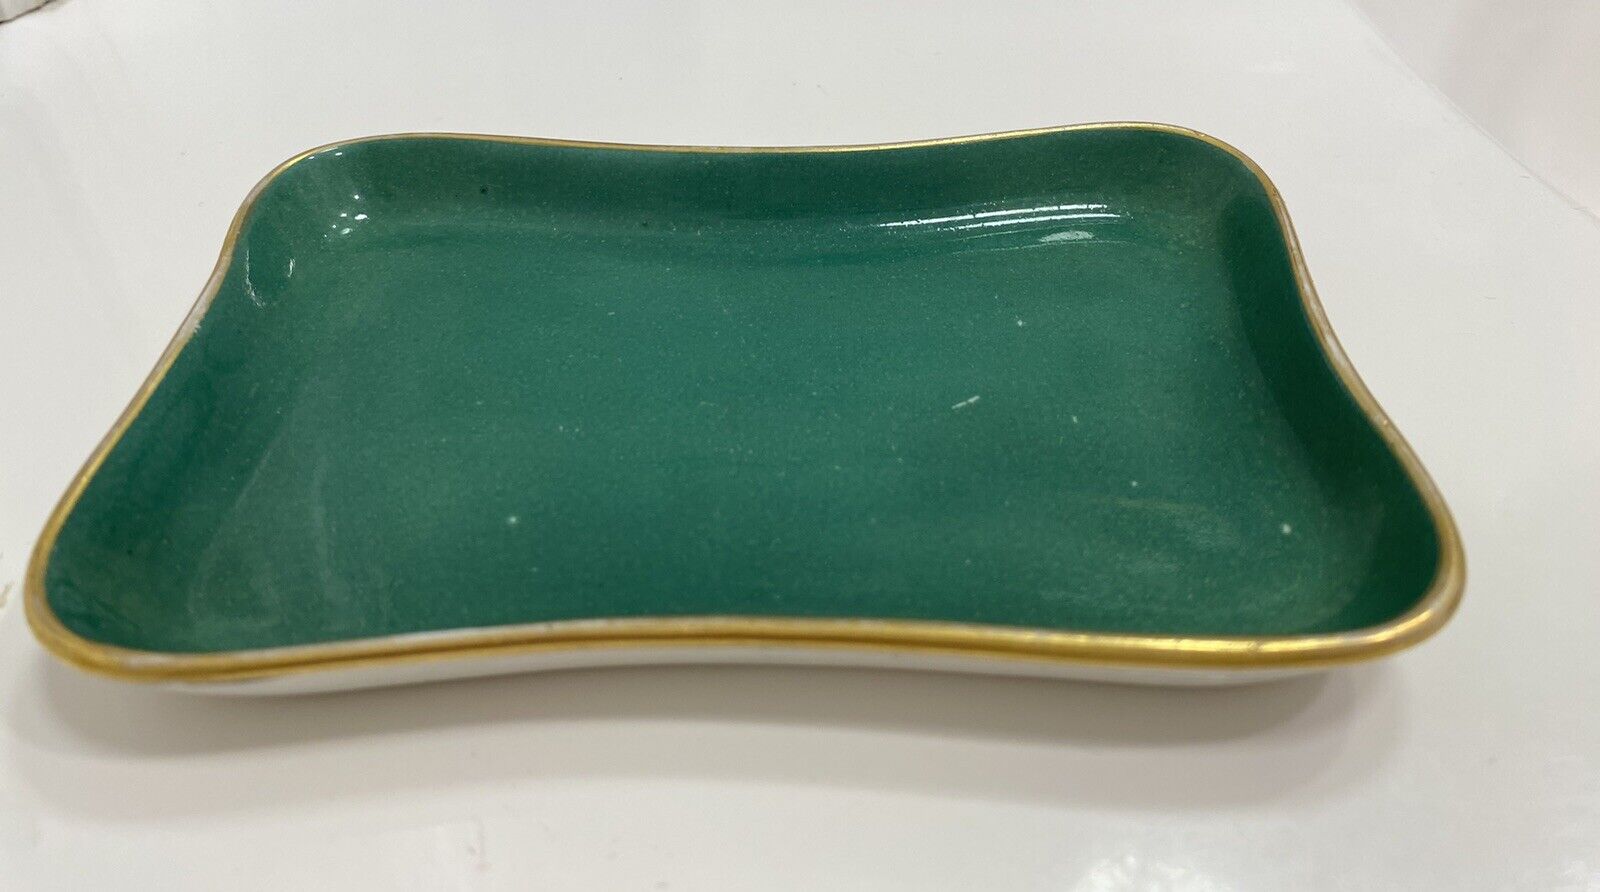 Rare Scammel Lamberton China Rectangular Green Trinket Dish 5.25”x3.5”*